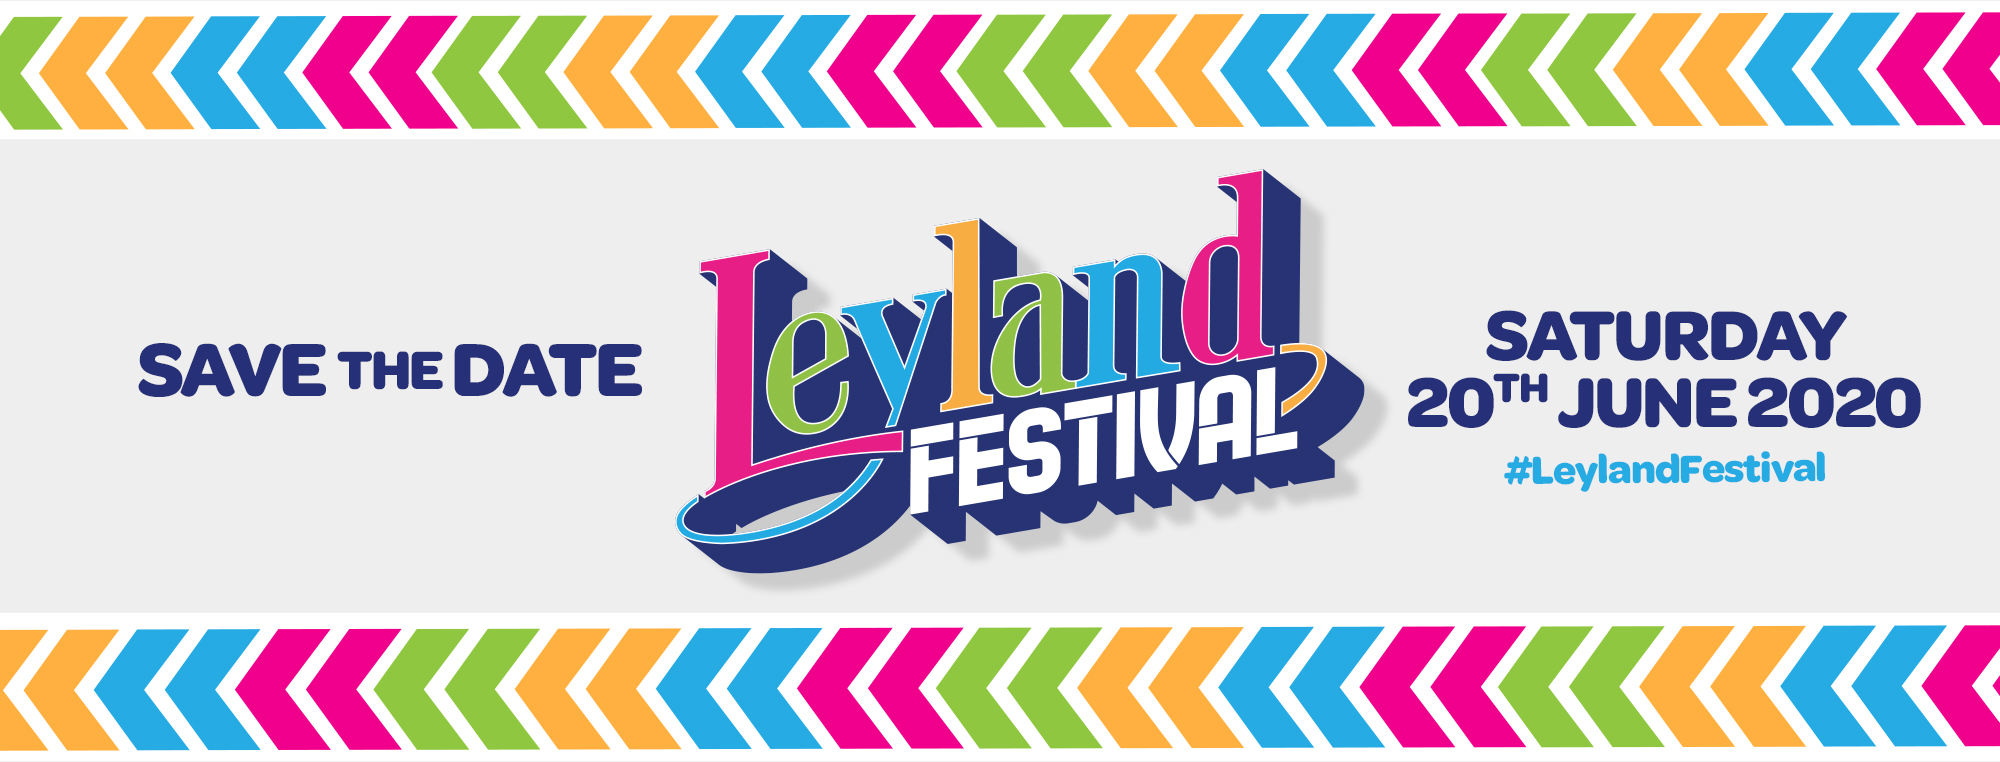 Leyland Festival Local Leyland Community Spotlight